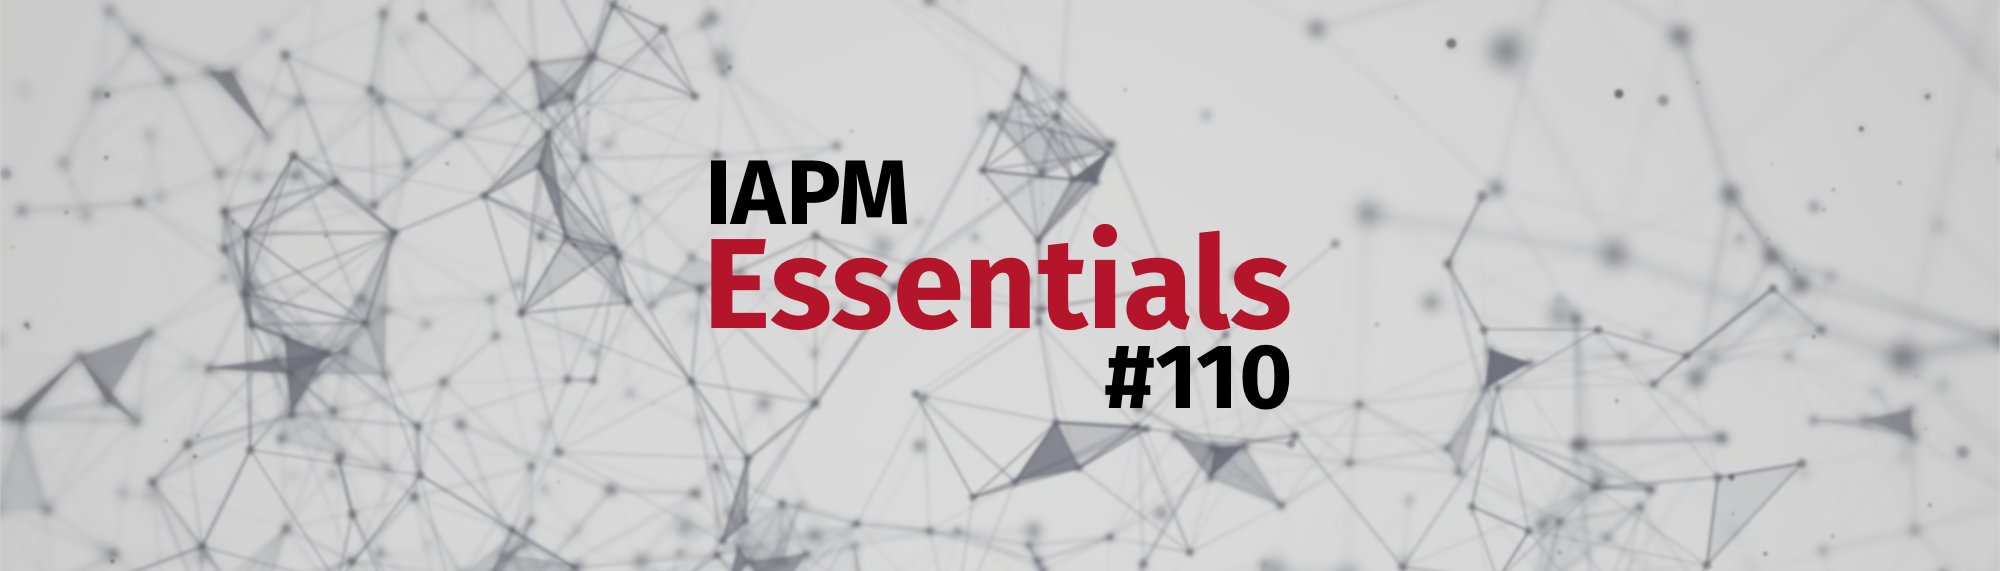 IAPM Essentials #110 - PM Neuigkeiten | IAPM